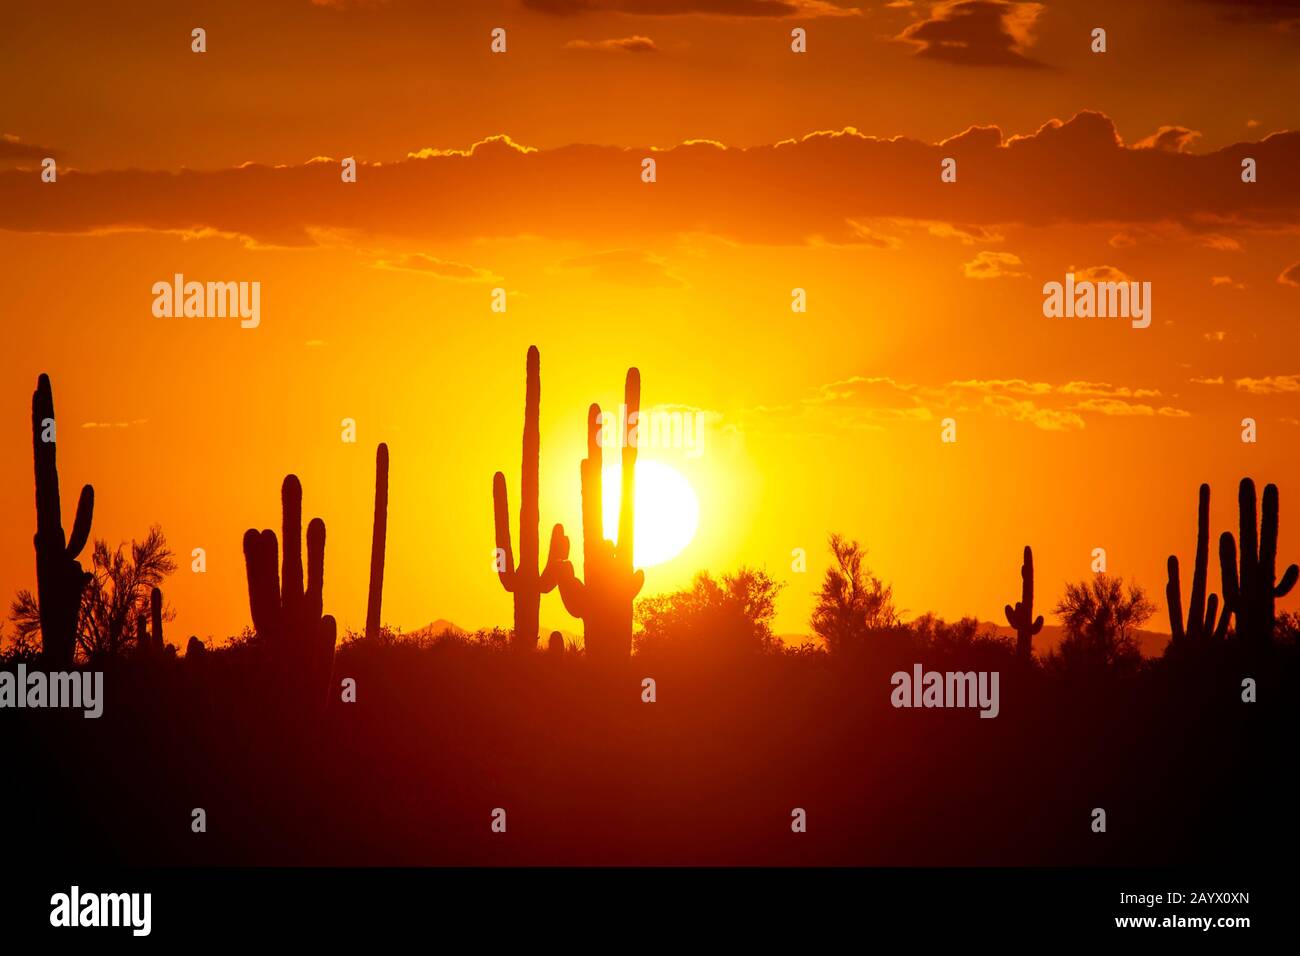 Sunset silhouetting saguaro cacti in the Sonoran desert near Phoenix Arizona, USA. Stock Photo